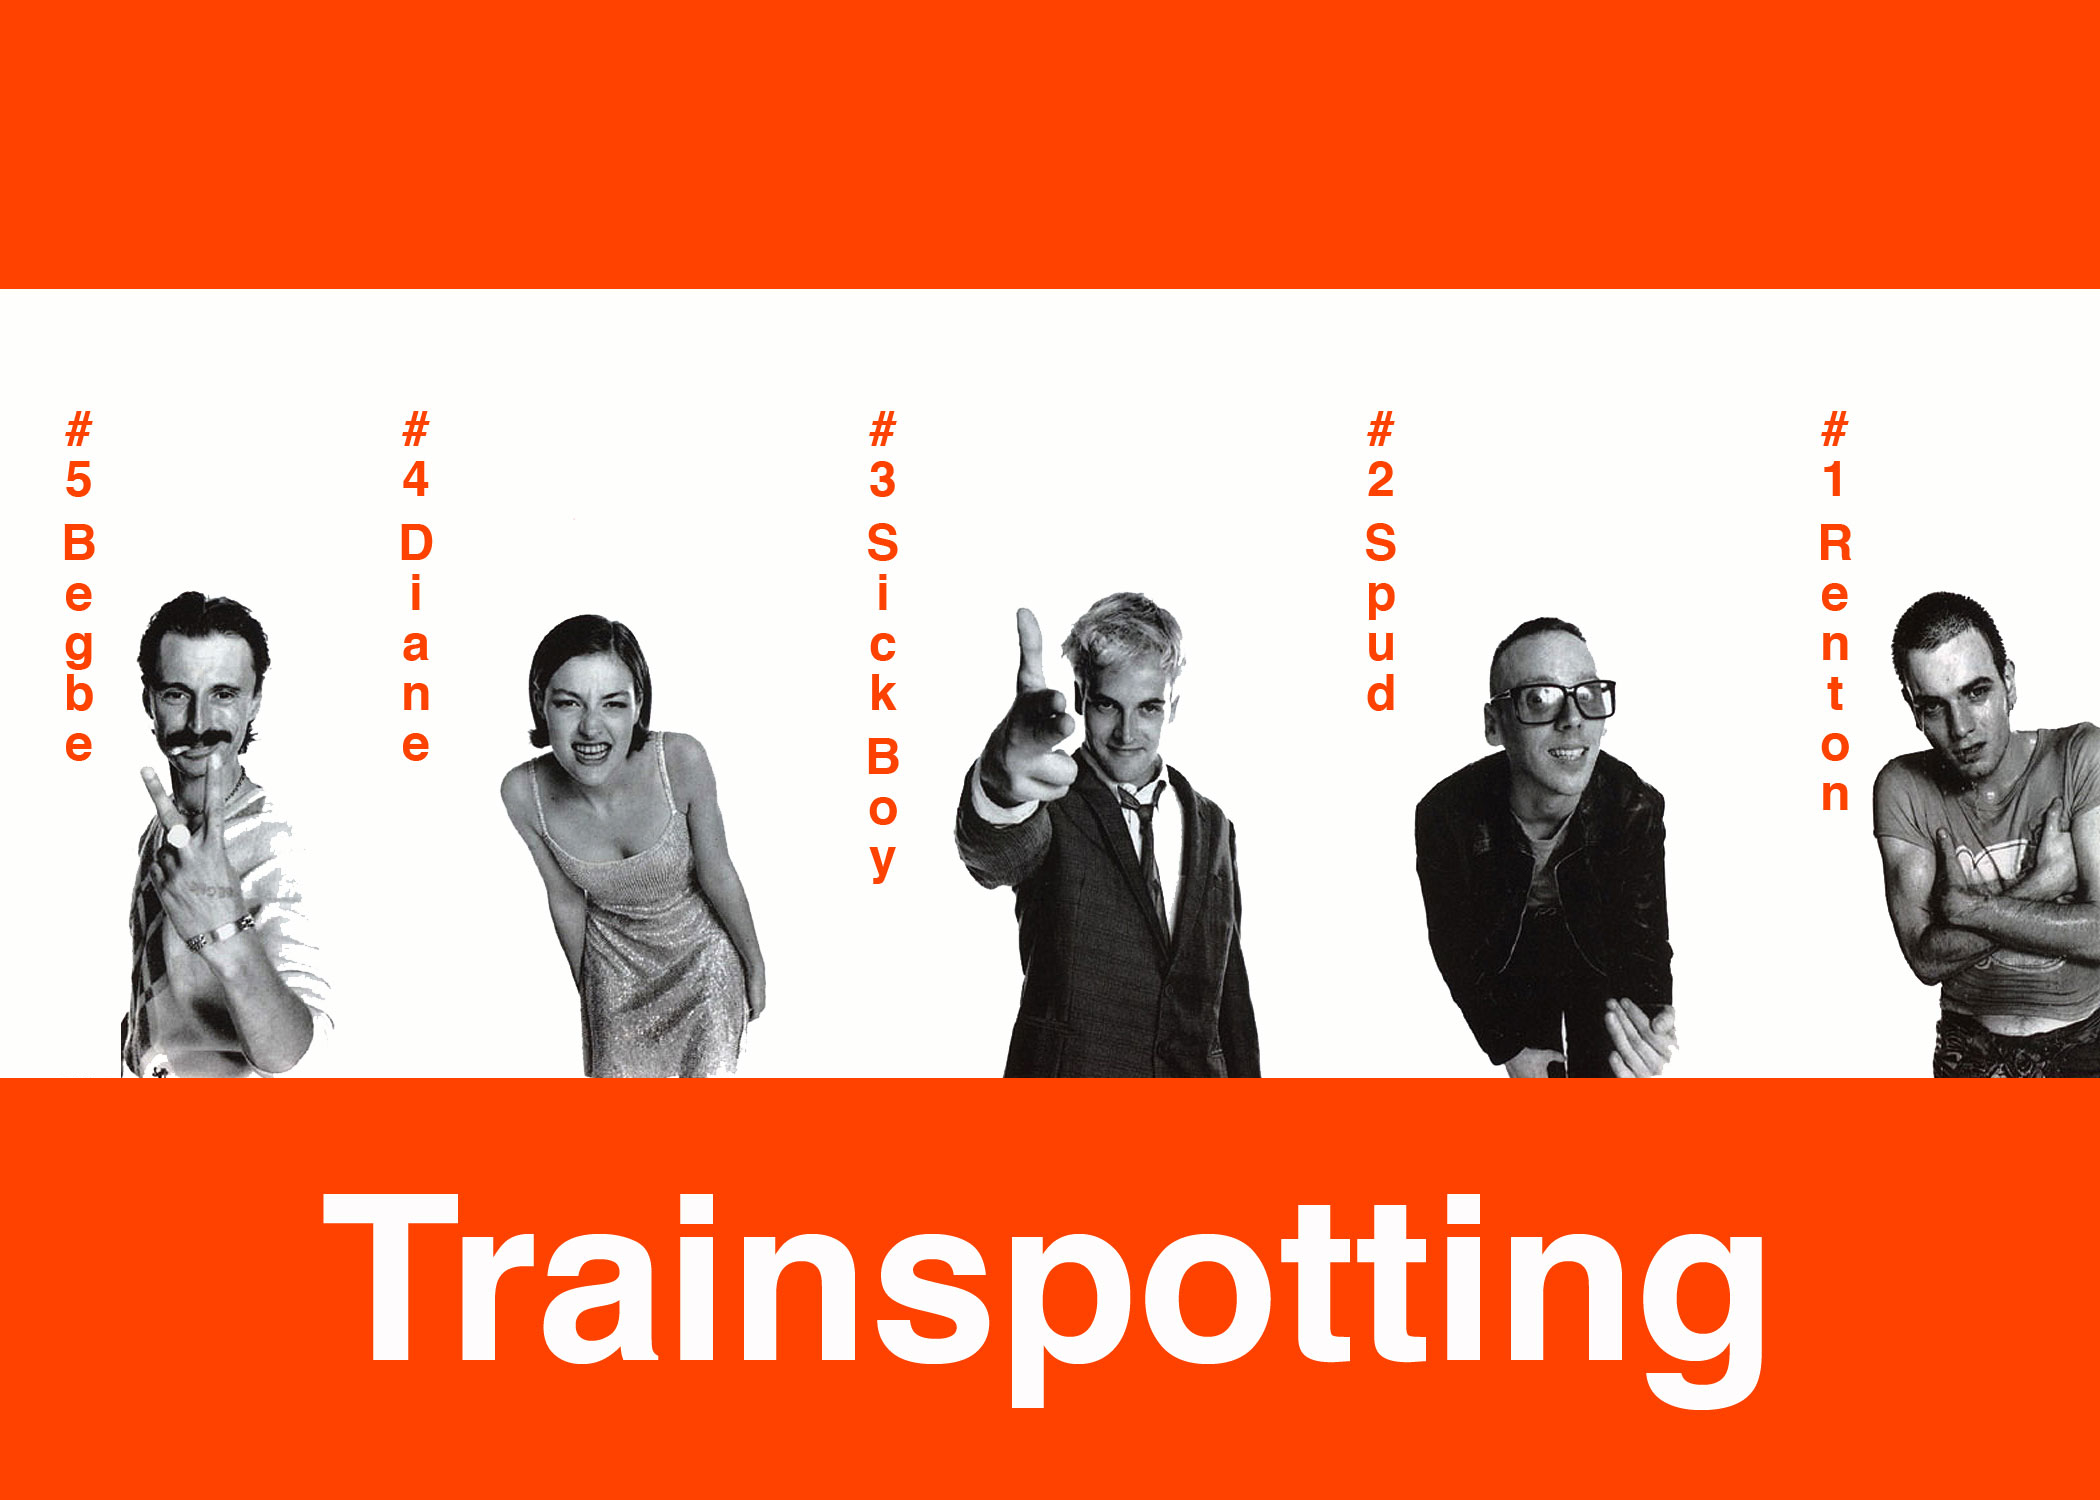 Trainspotting, Ewan Mcgregor, Robert Carlyle - desktop wallpaper